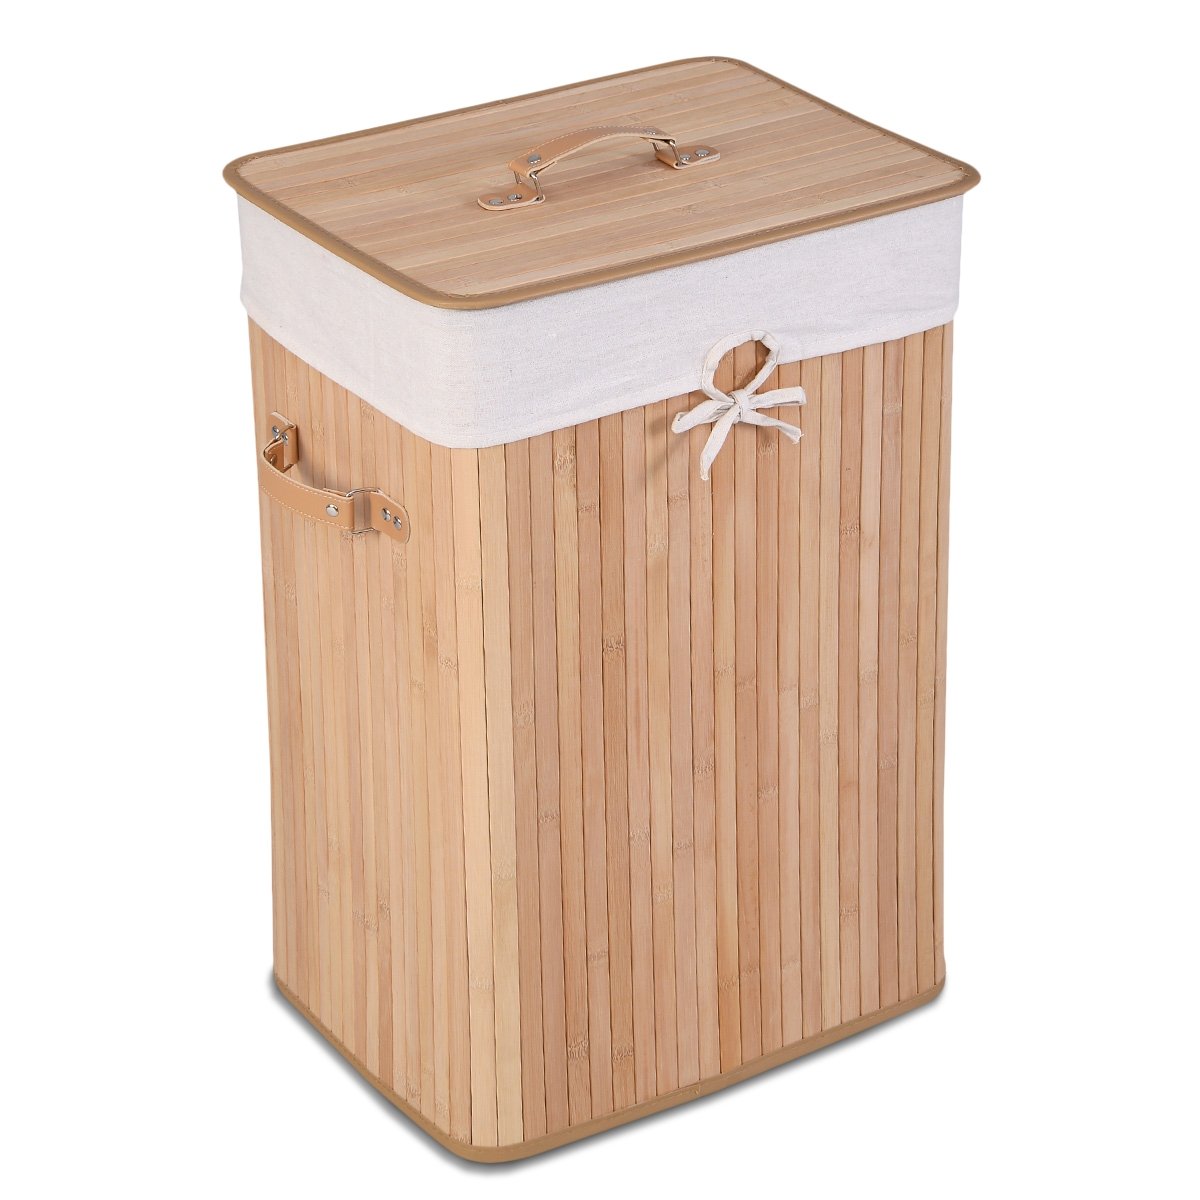 Rectangle Bamboo Hamper Laundry Basket Washing Cloth Bin Storage Bag Lid, Natural